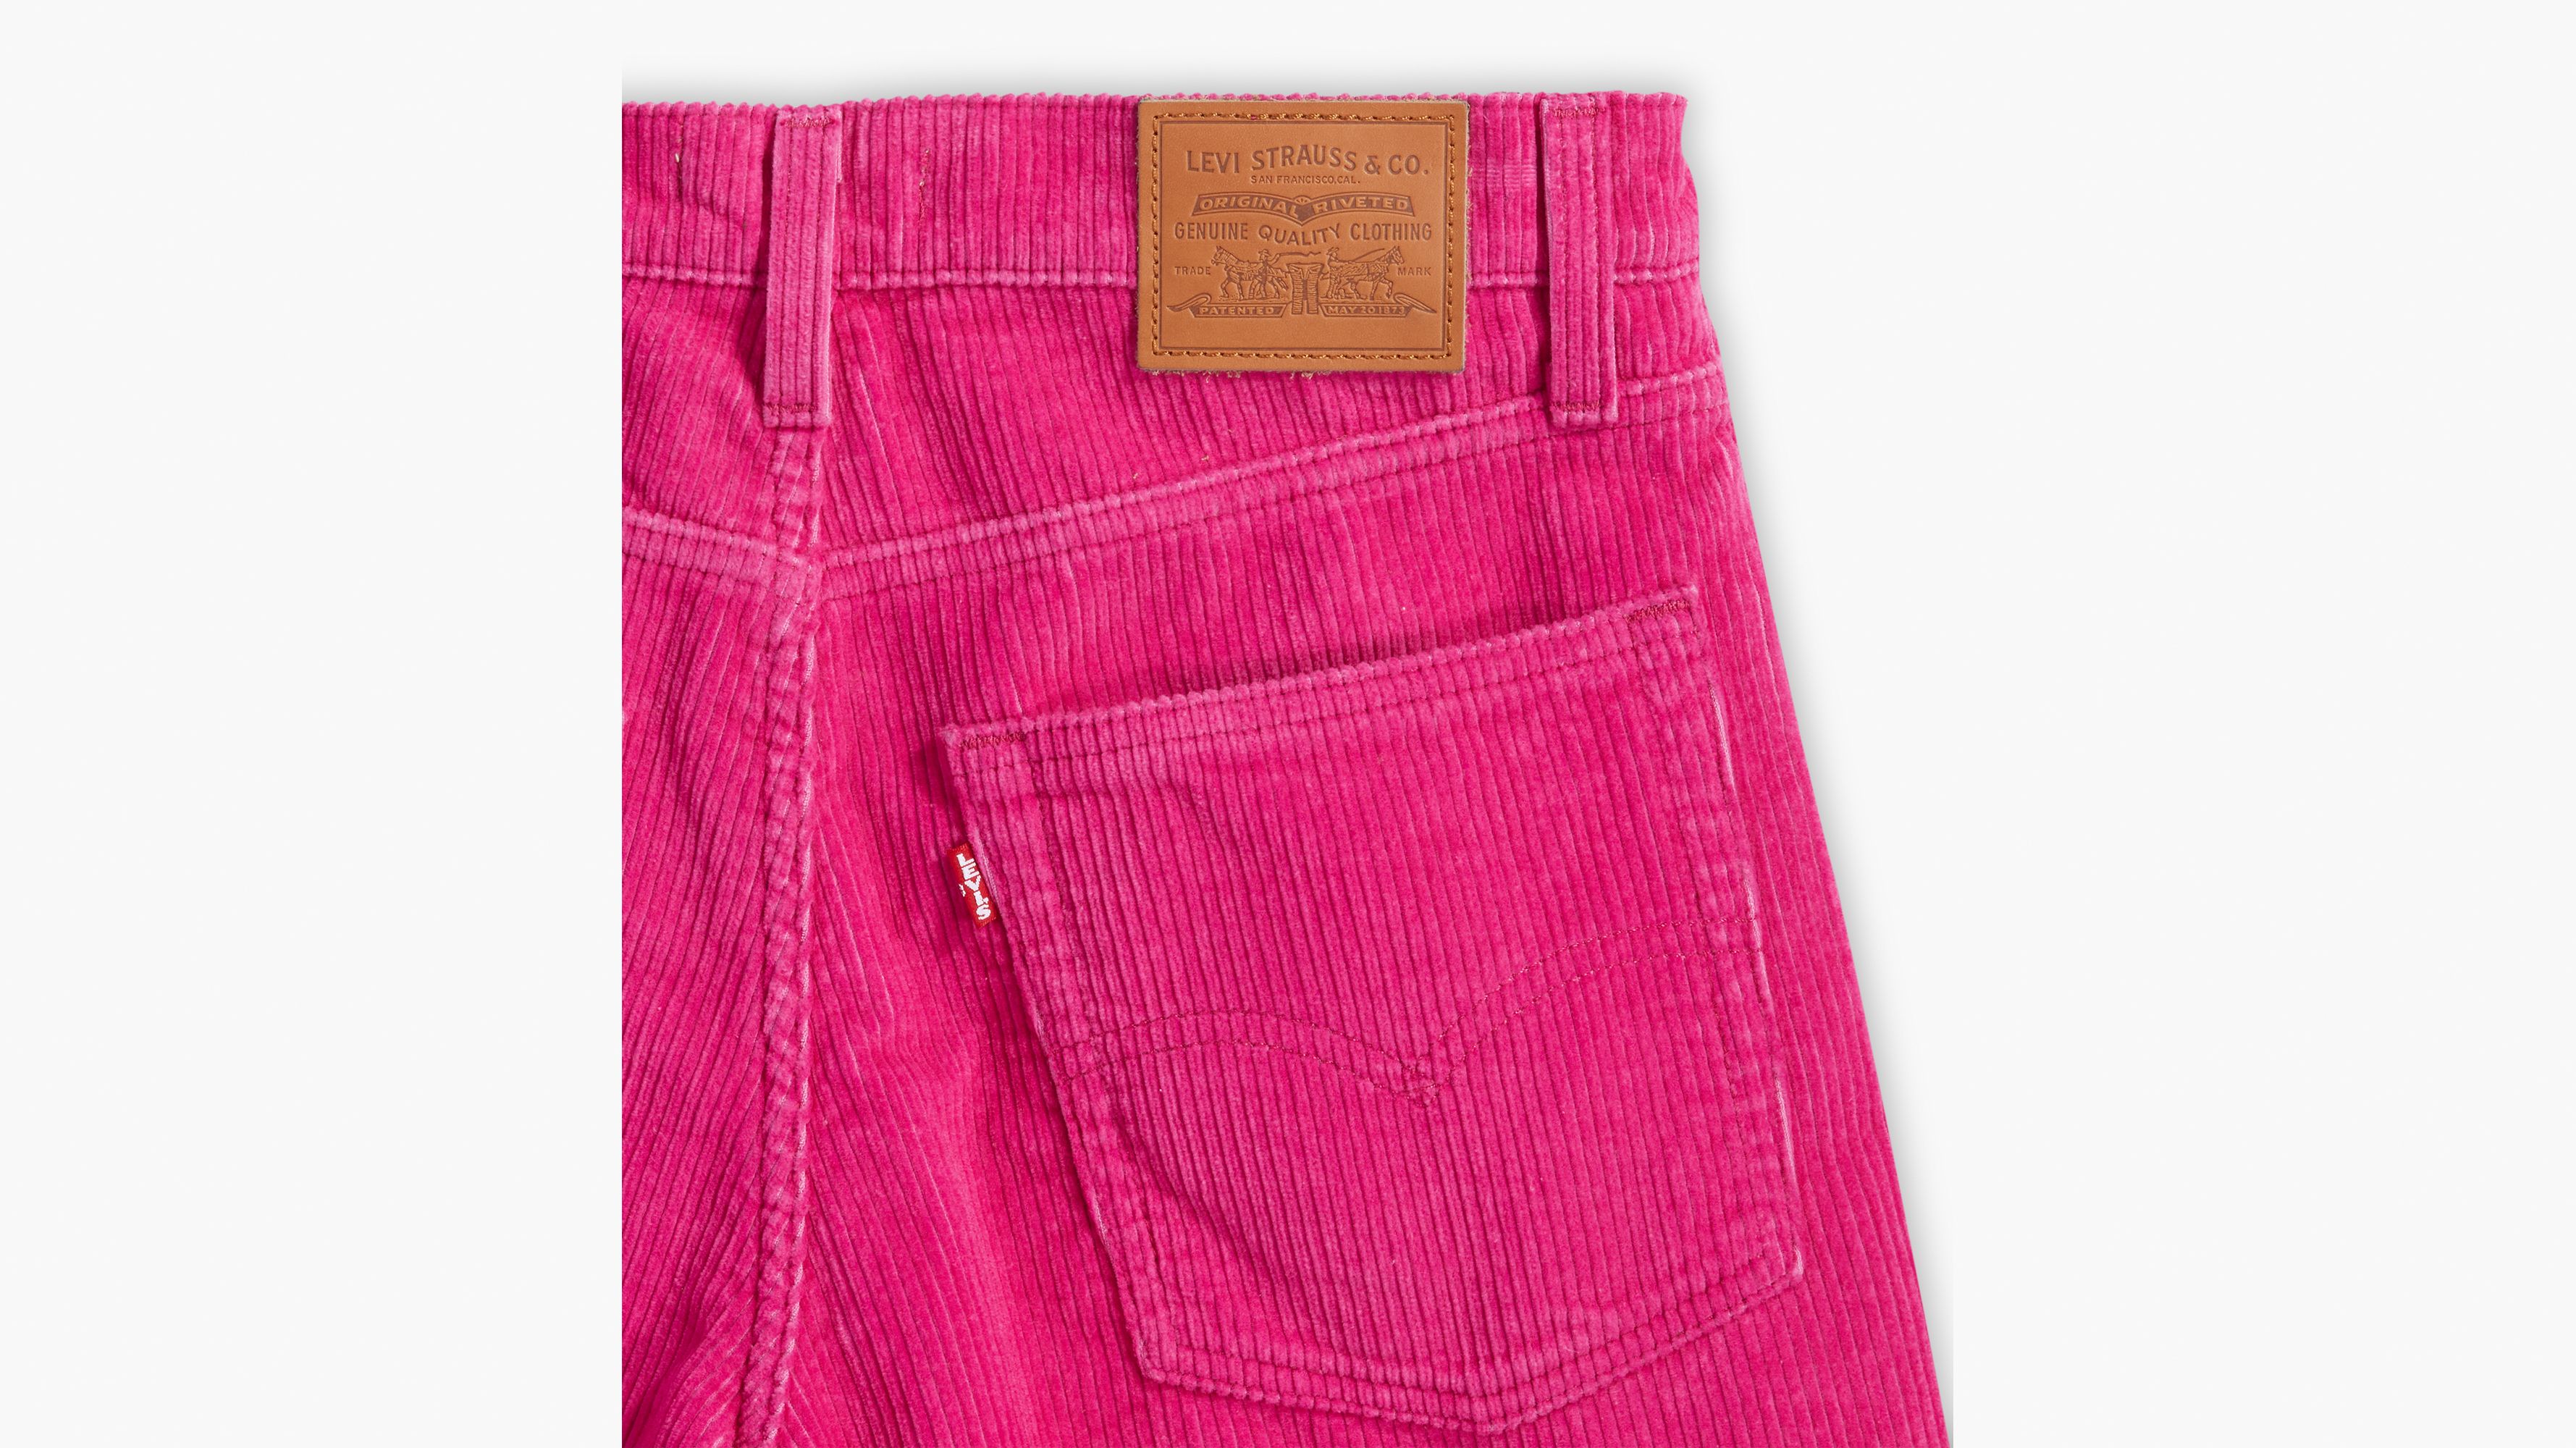 sdbrld Pink Pants for Women Pantalones De Pana Corduroy Pants for